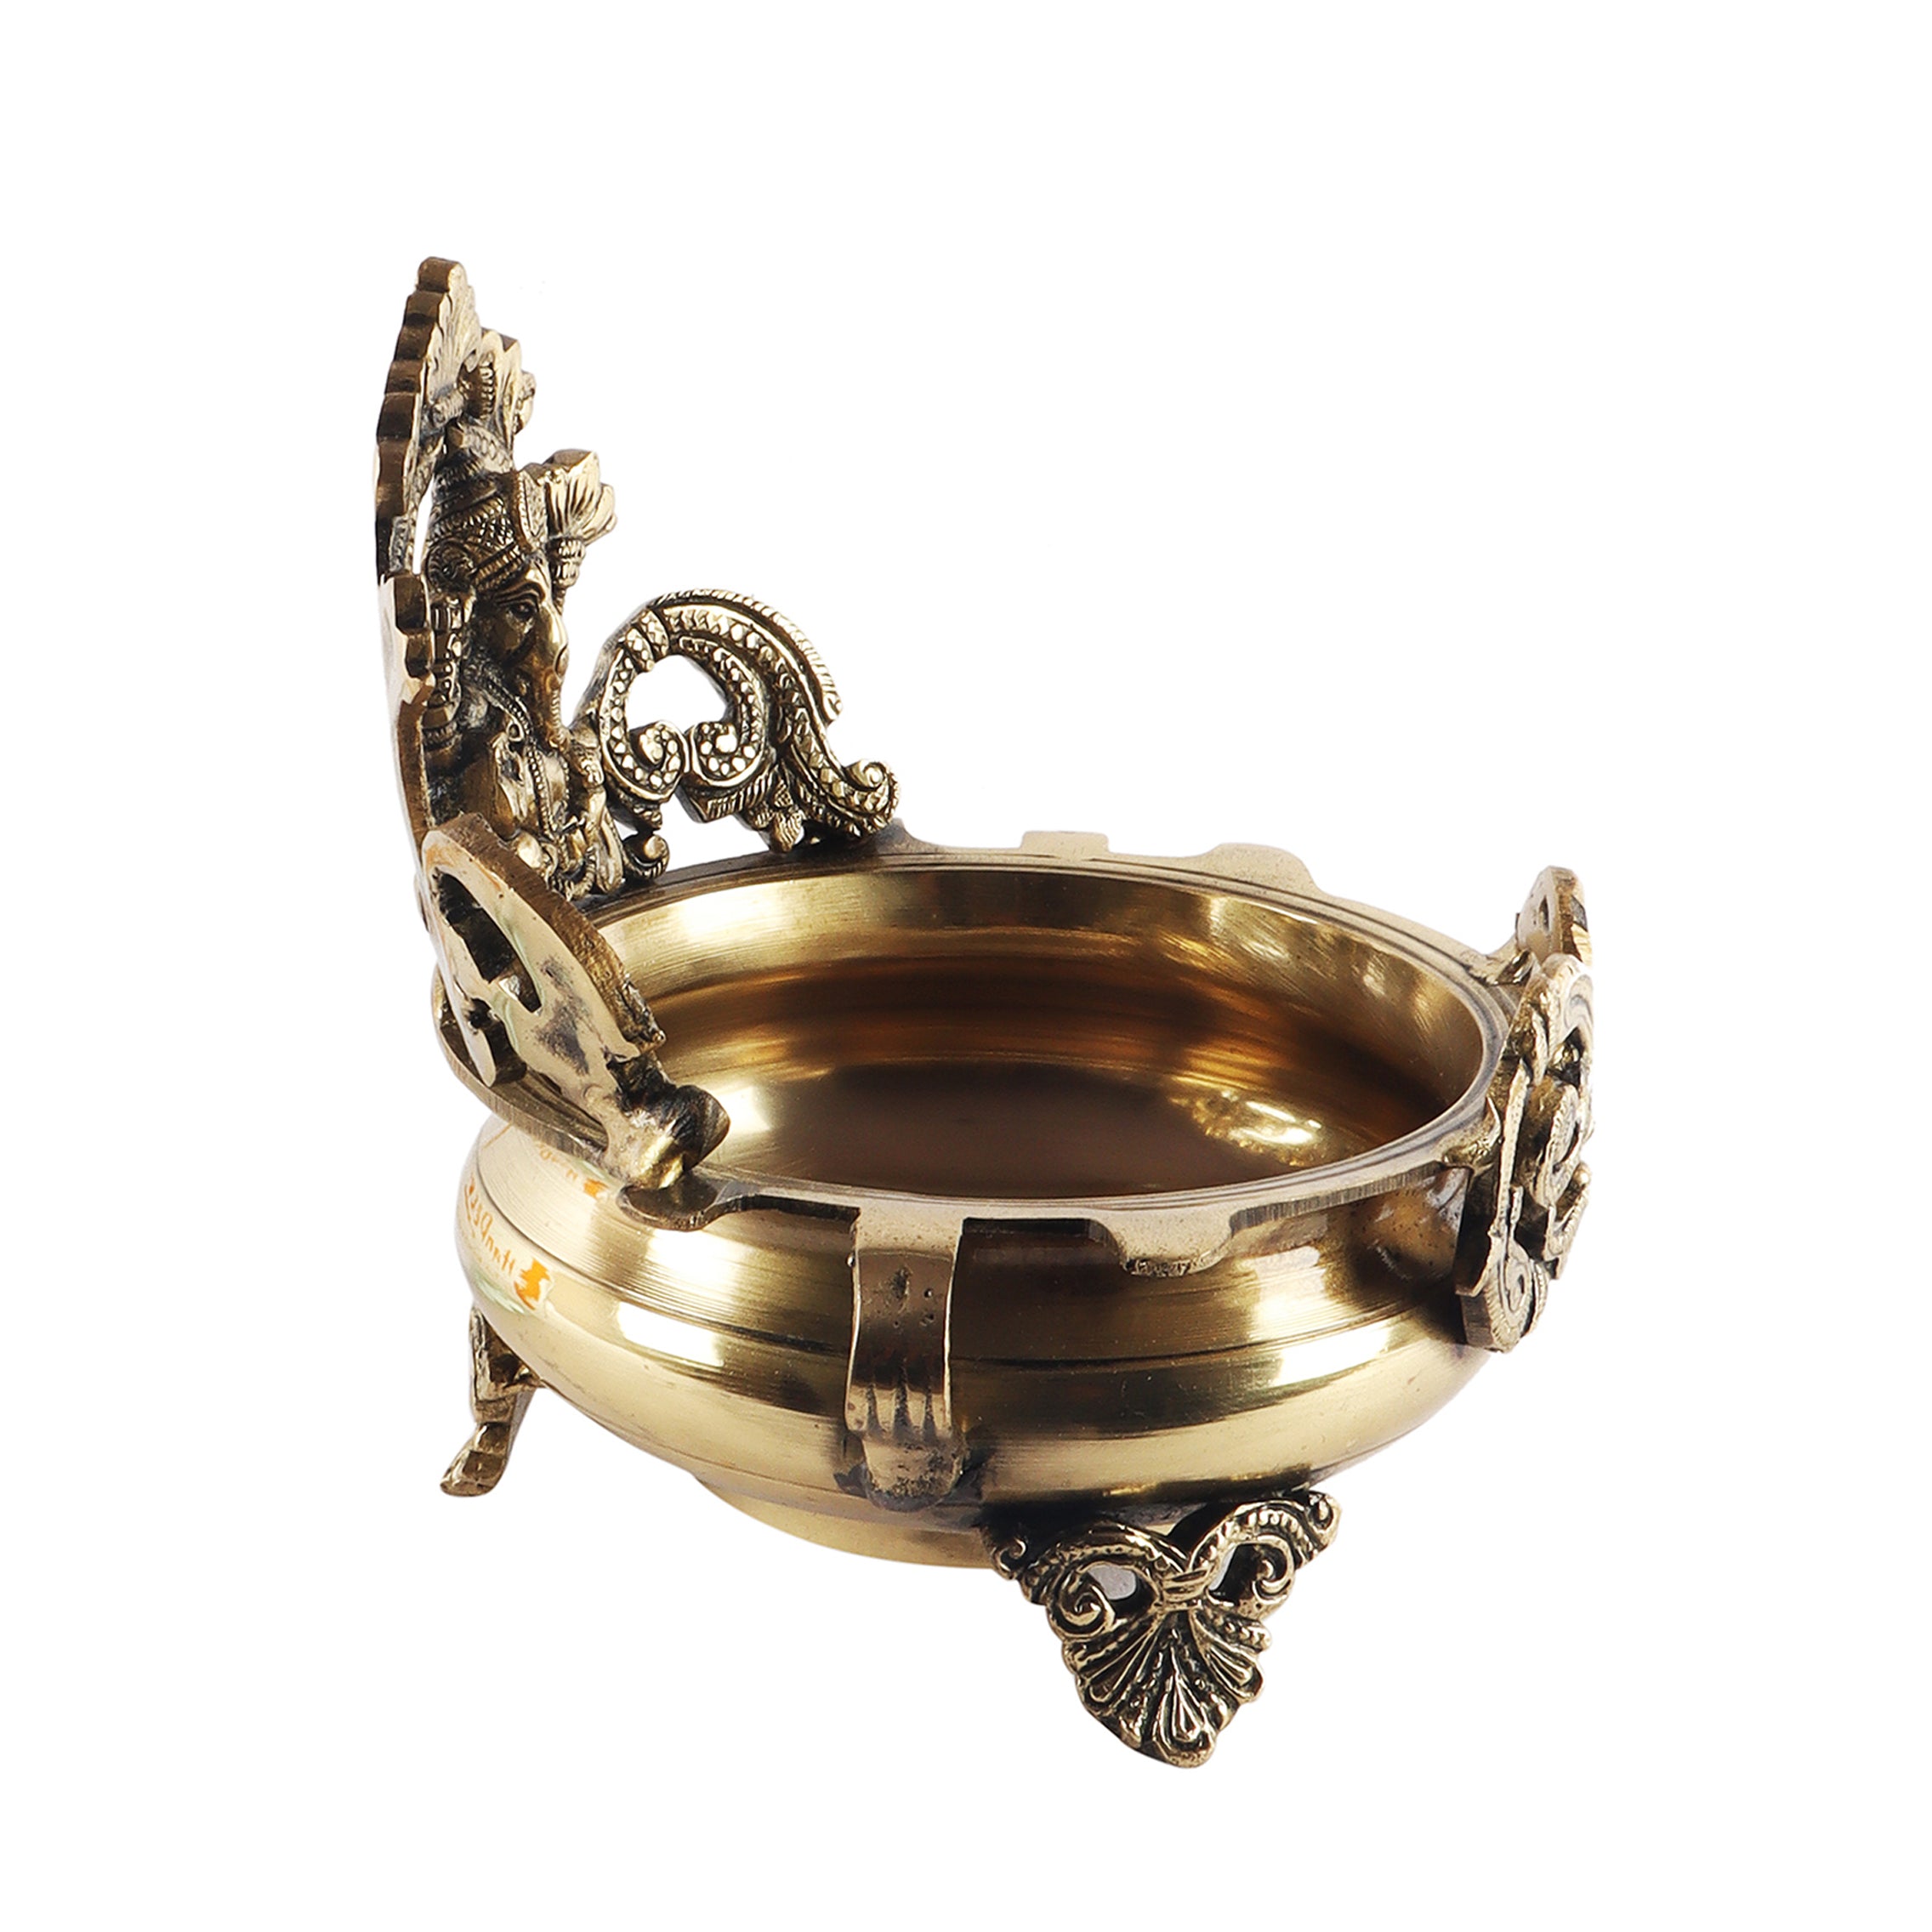 Brass Ethnic Carved Ganesha Design 7 Inches Brass Decor Urli Decor Bowl Showpiece